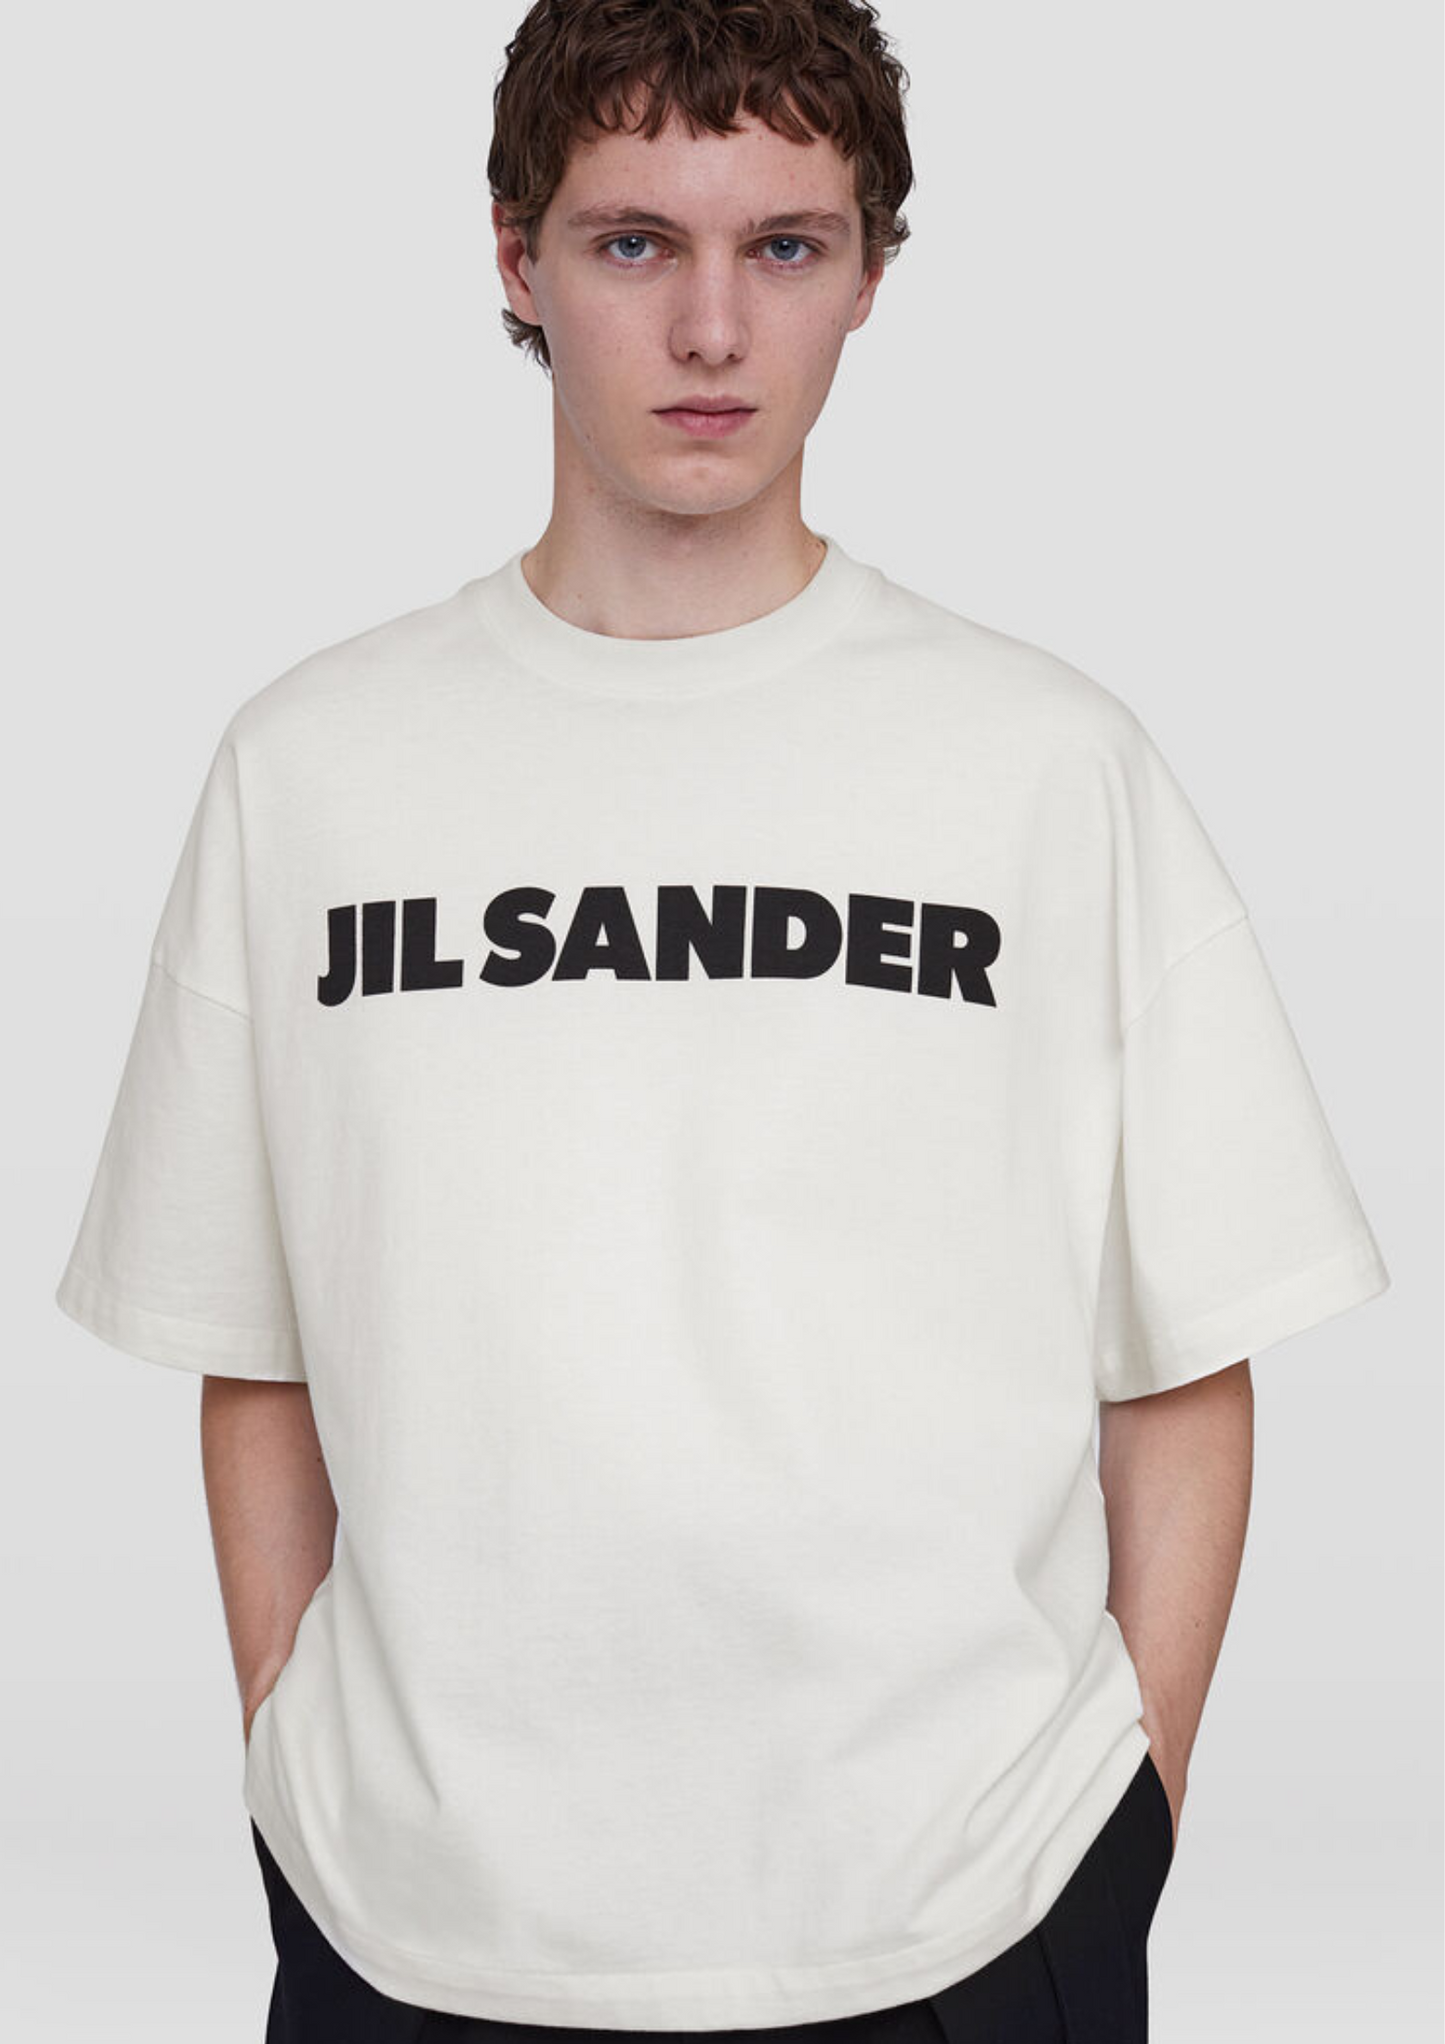 JIL SANDER Logo Printed T-Shirt – The Factory KL